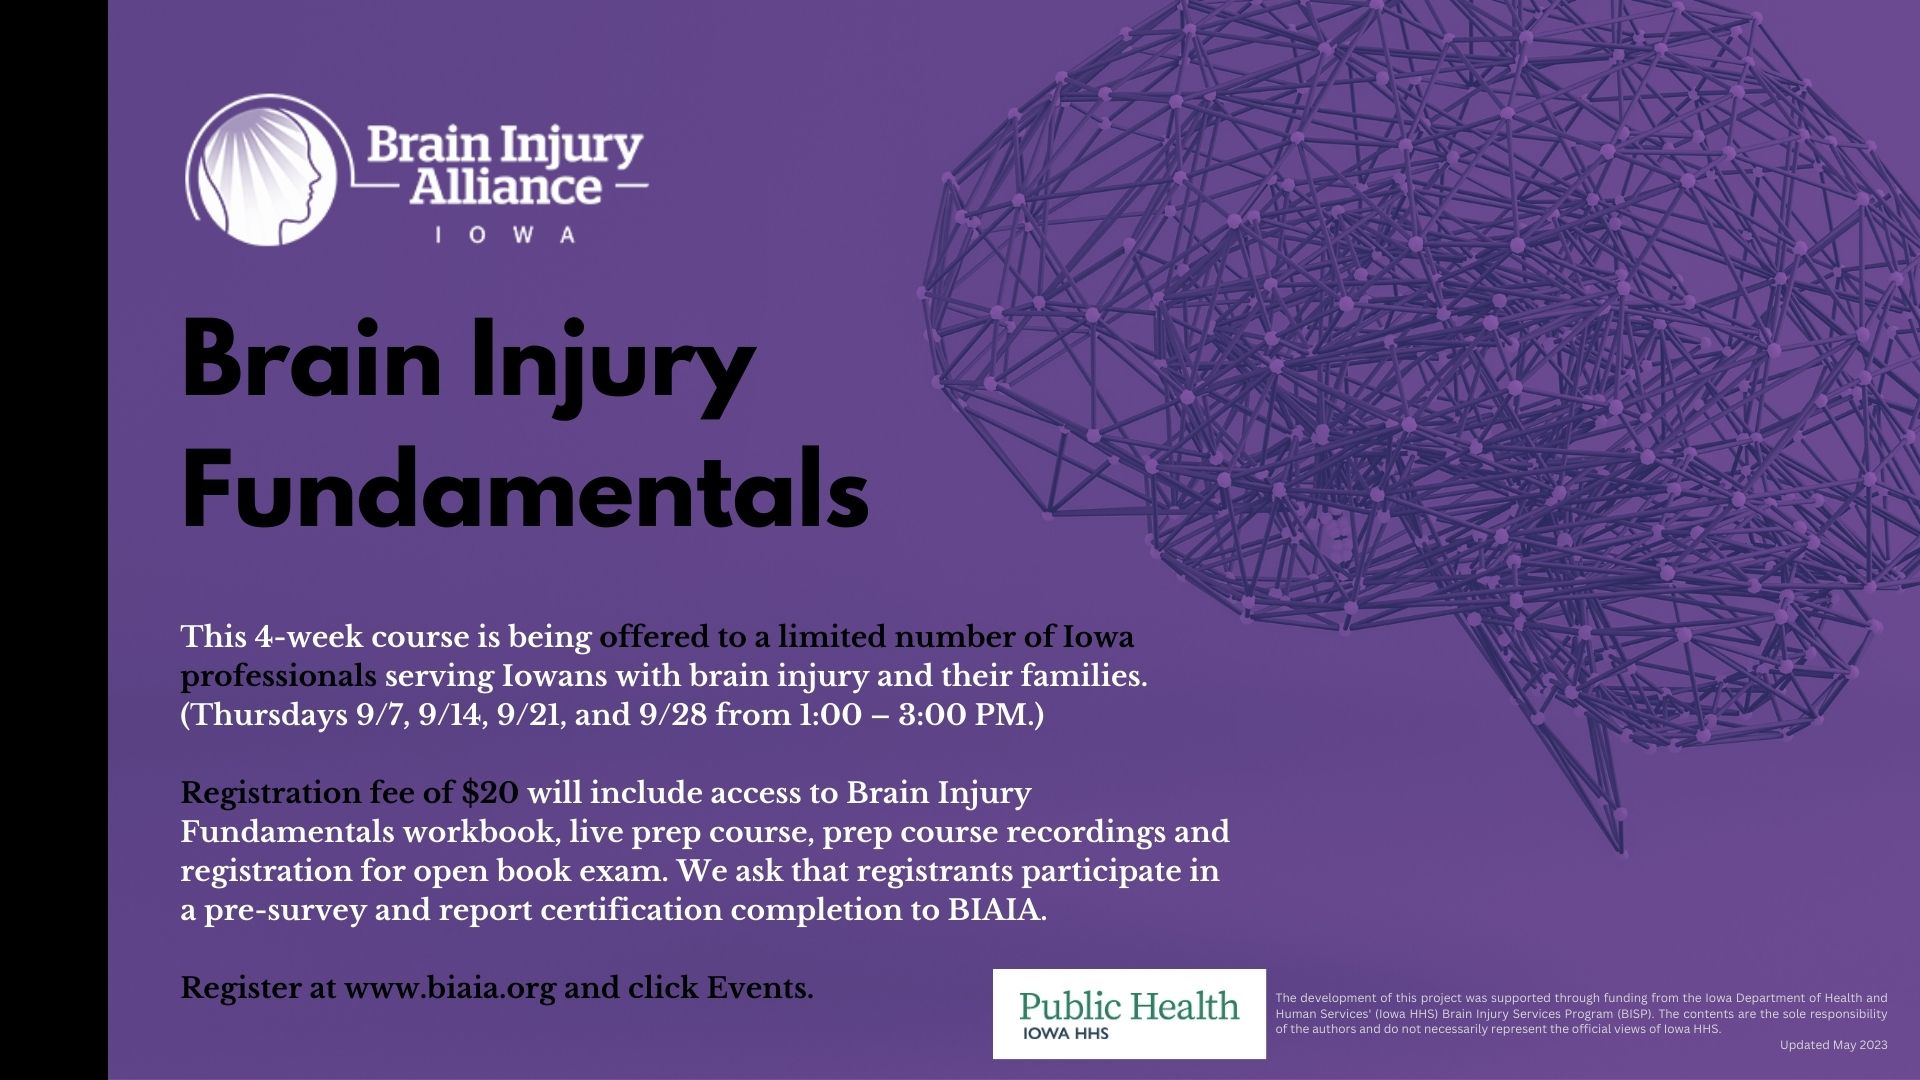 Brain Injury Alliance of Iowa